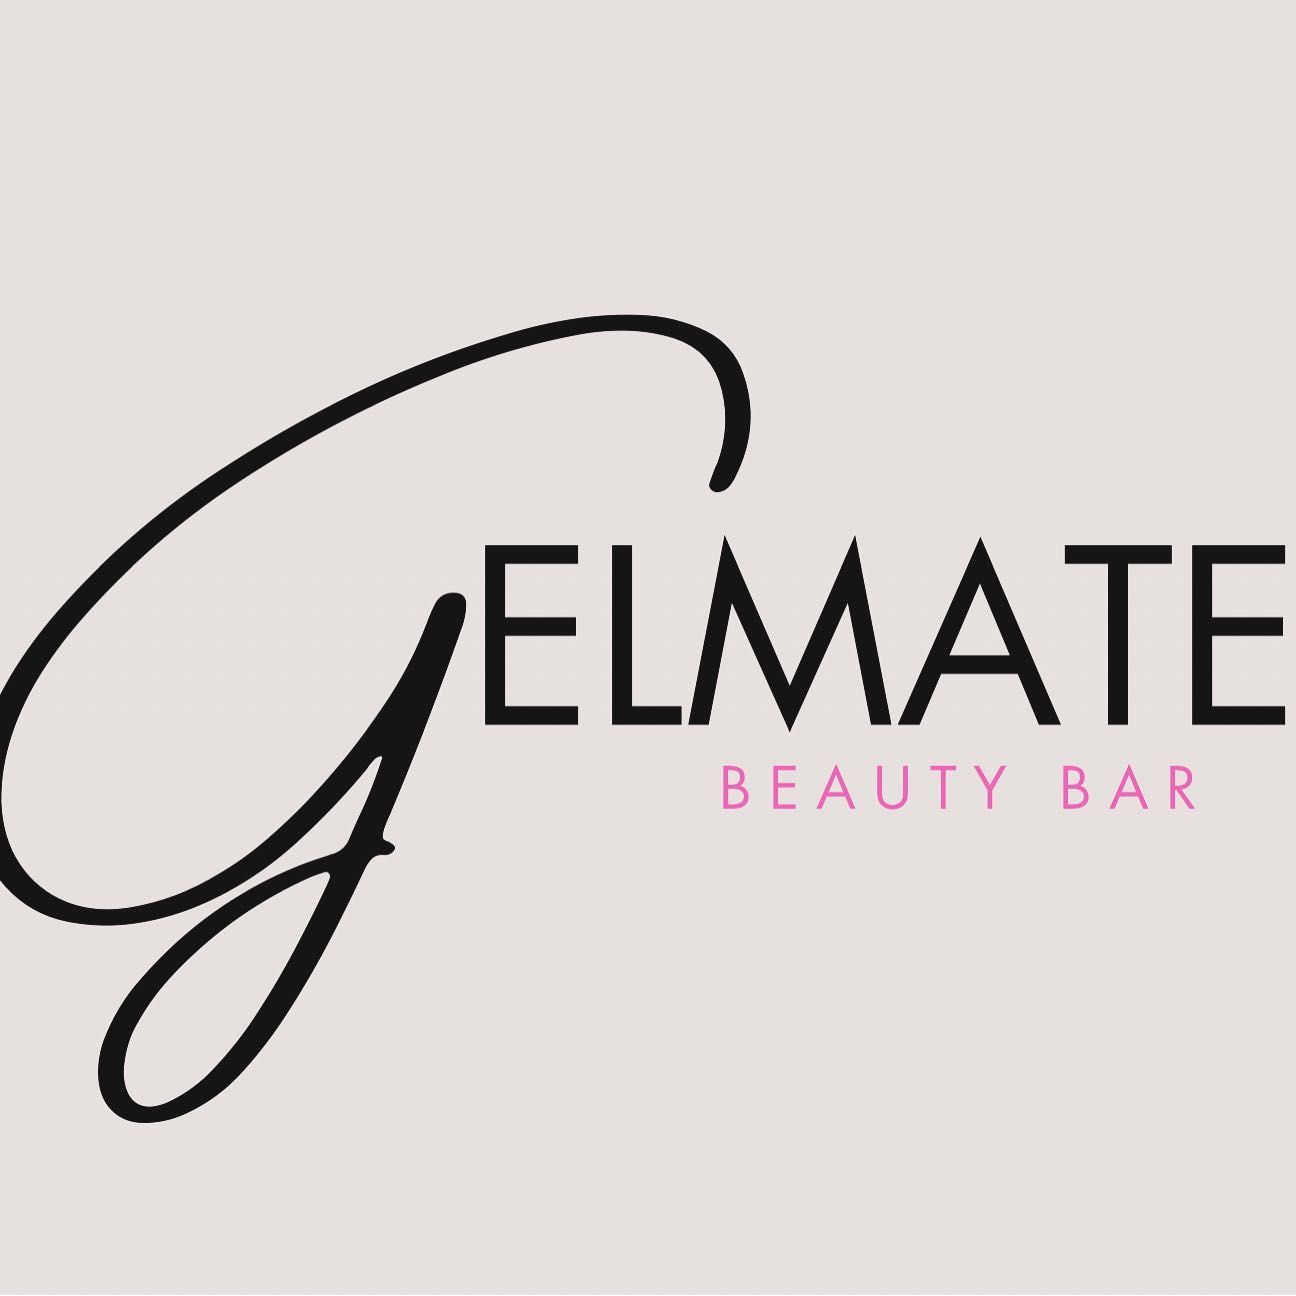 Gelmate Beauty Bar, 2 oakwood blvd building 190, Suite 2, Hollywood, 33020